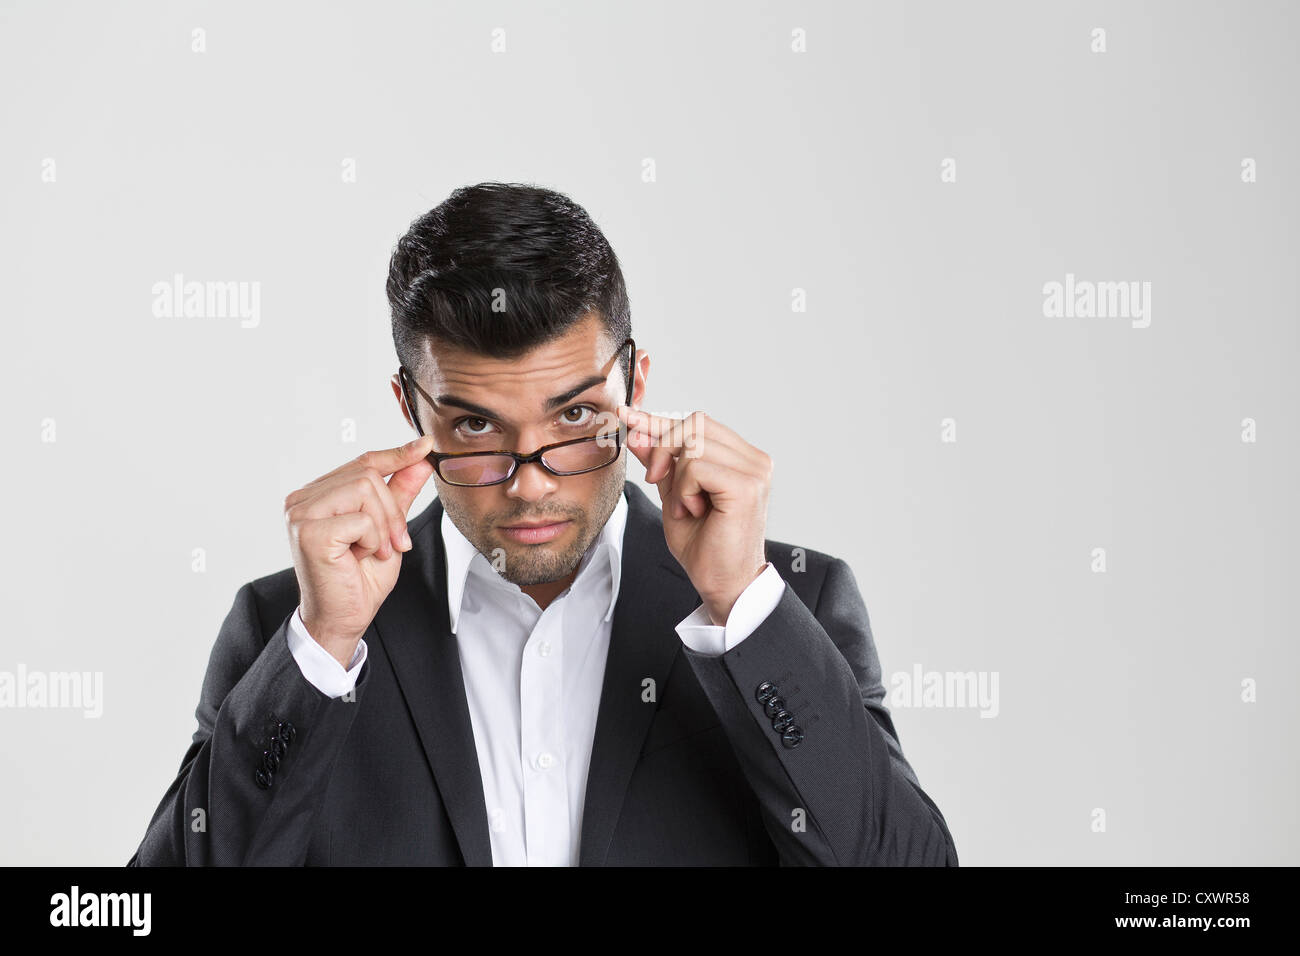 Businessman peering over glasses Stock Photo